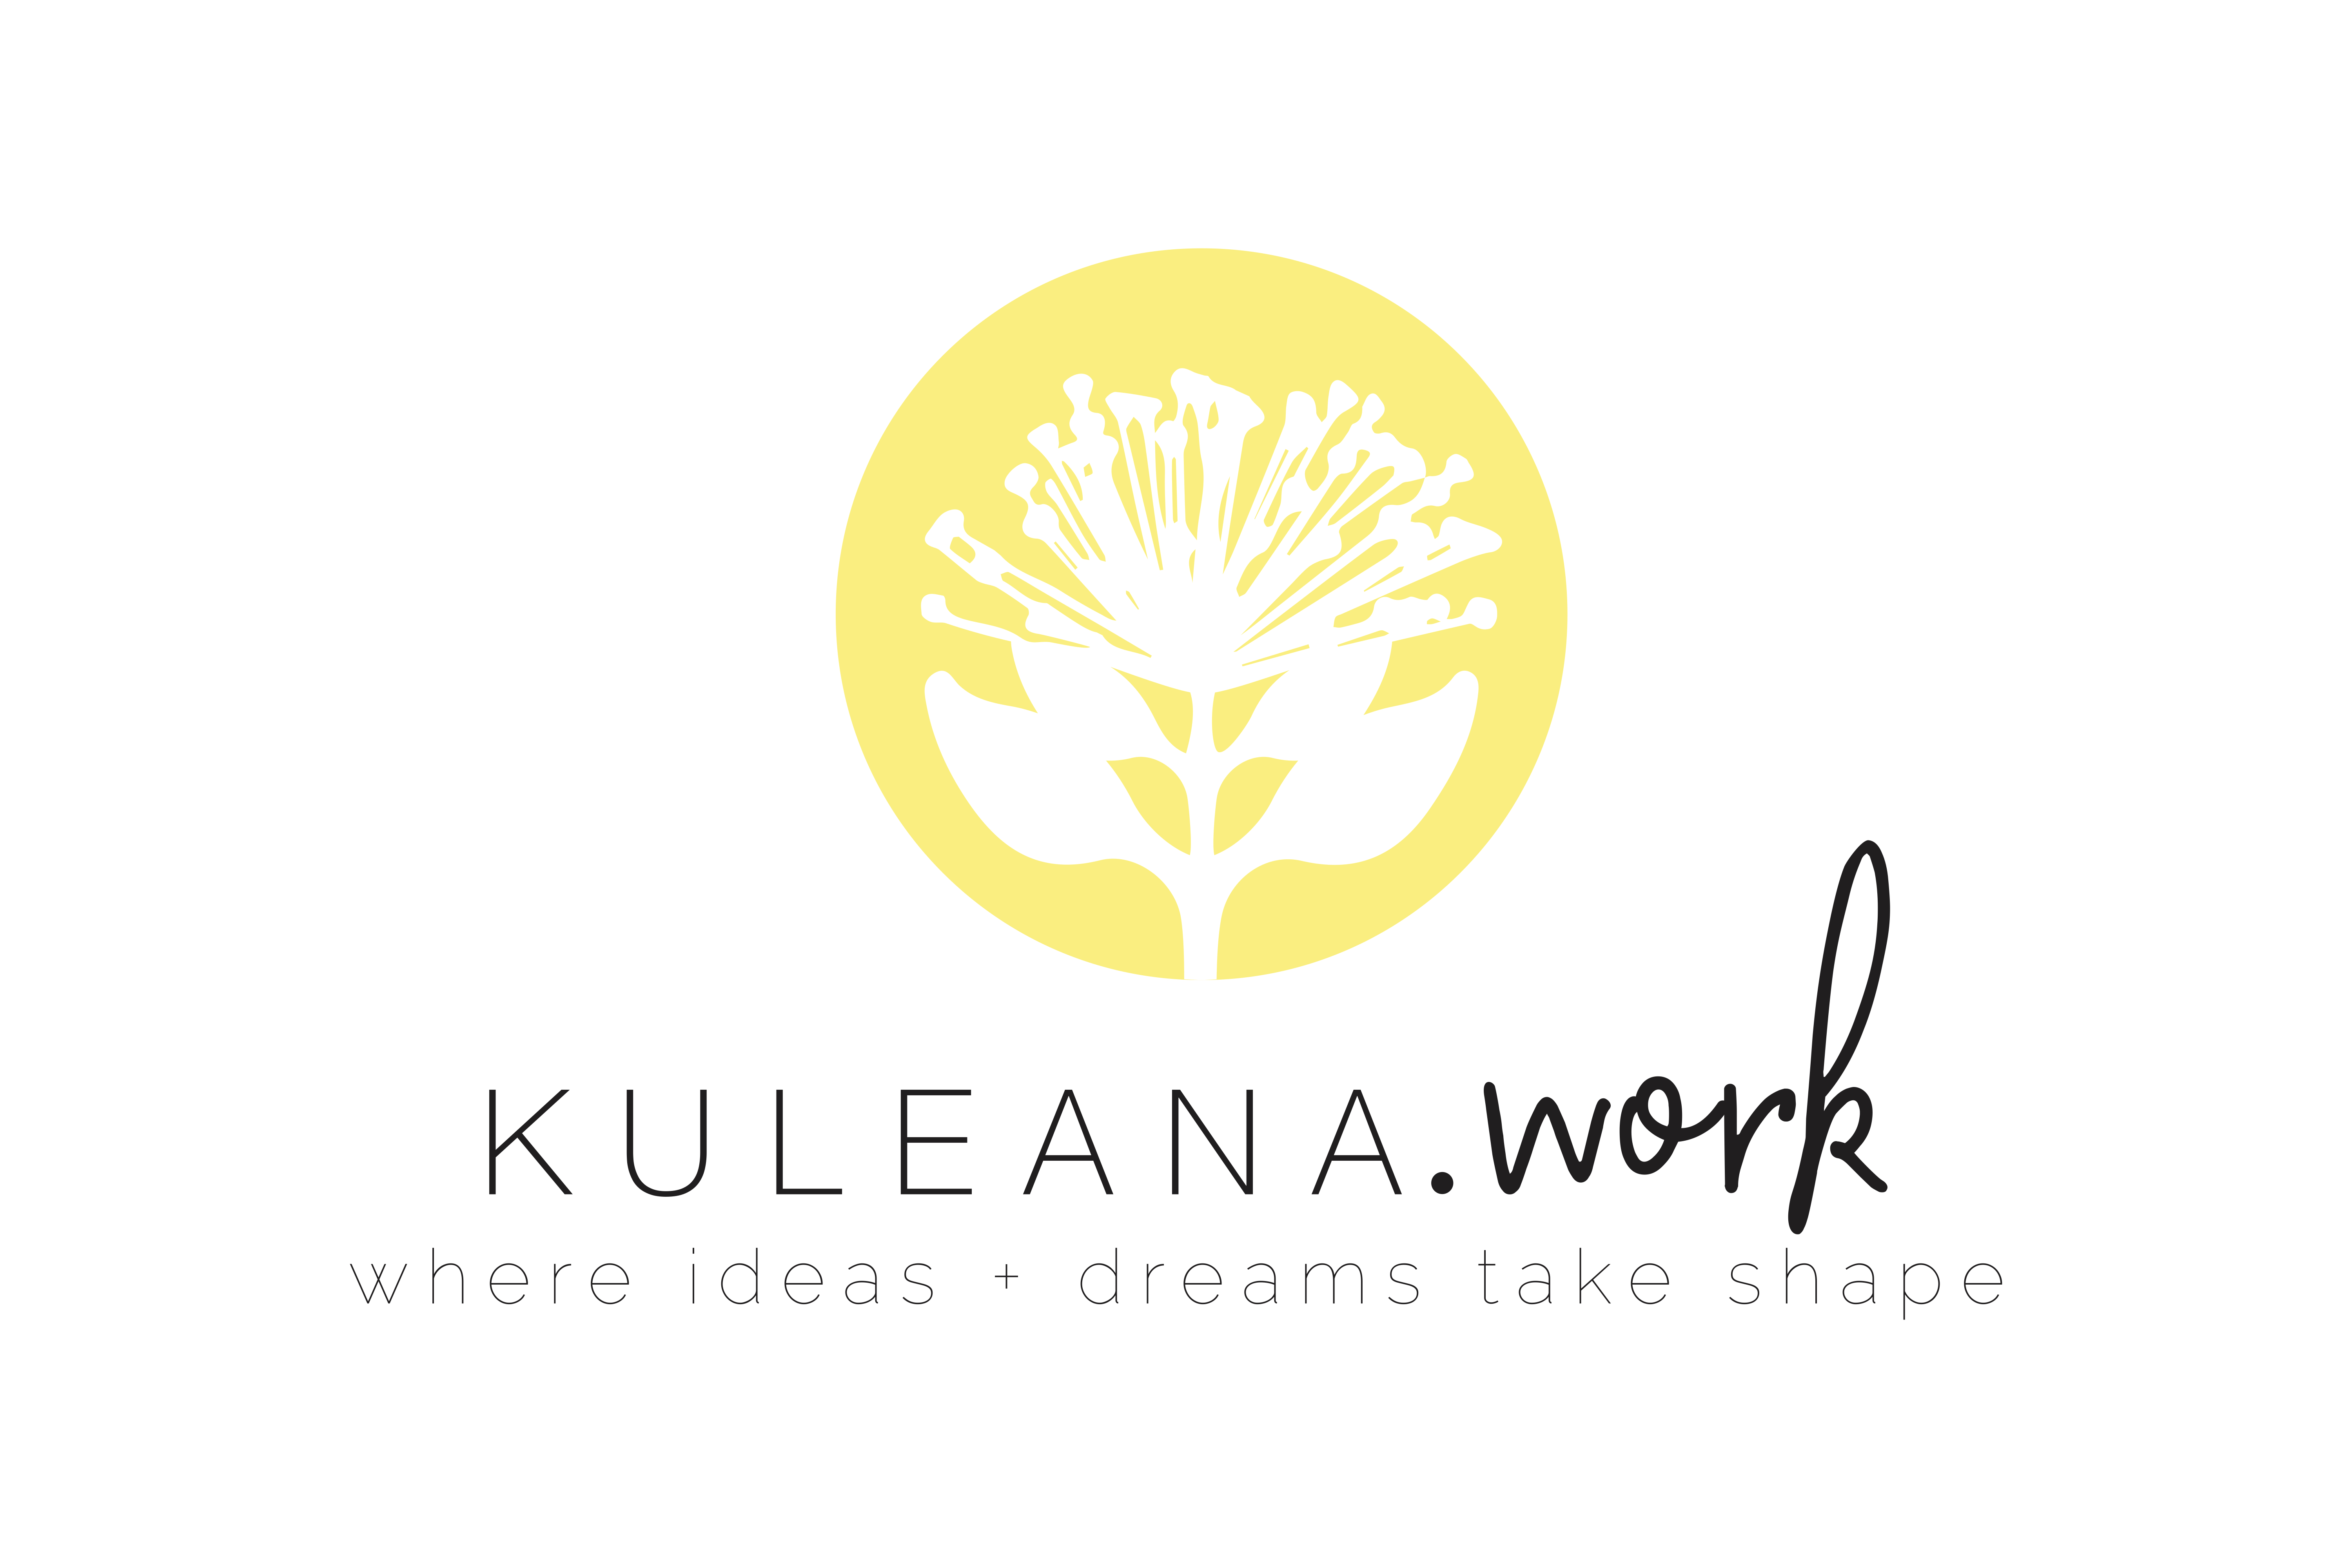 Kuleana.work